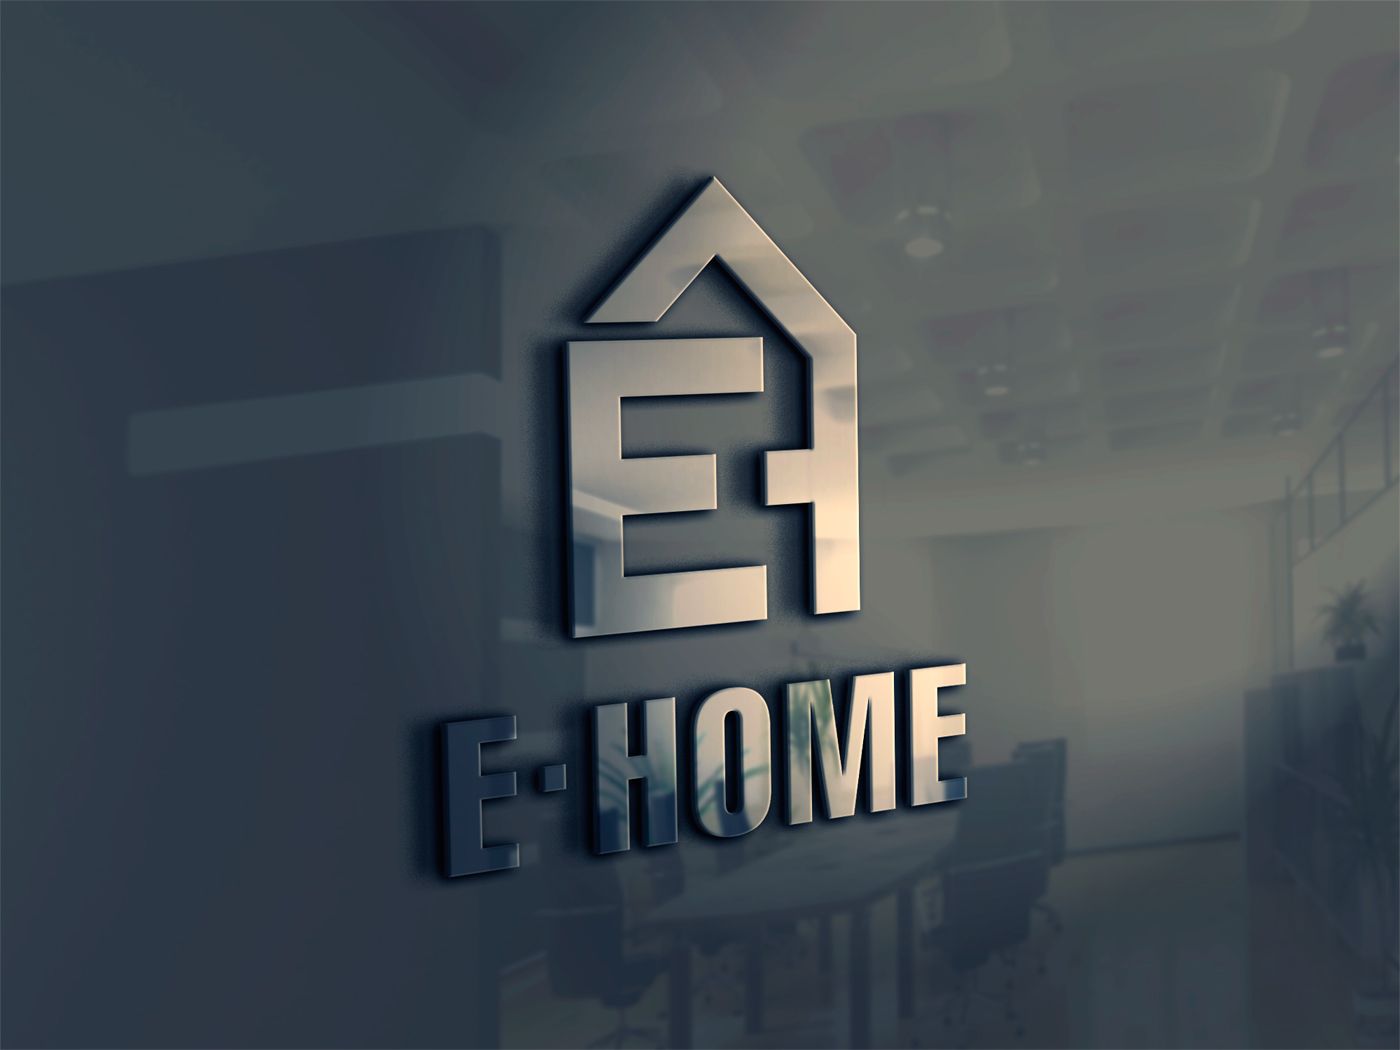 Логотип для E-home - дизайнер mz777